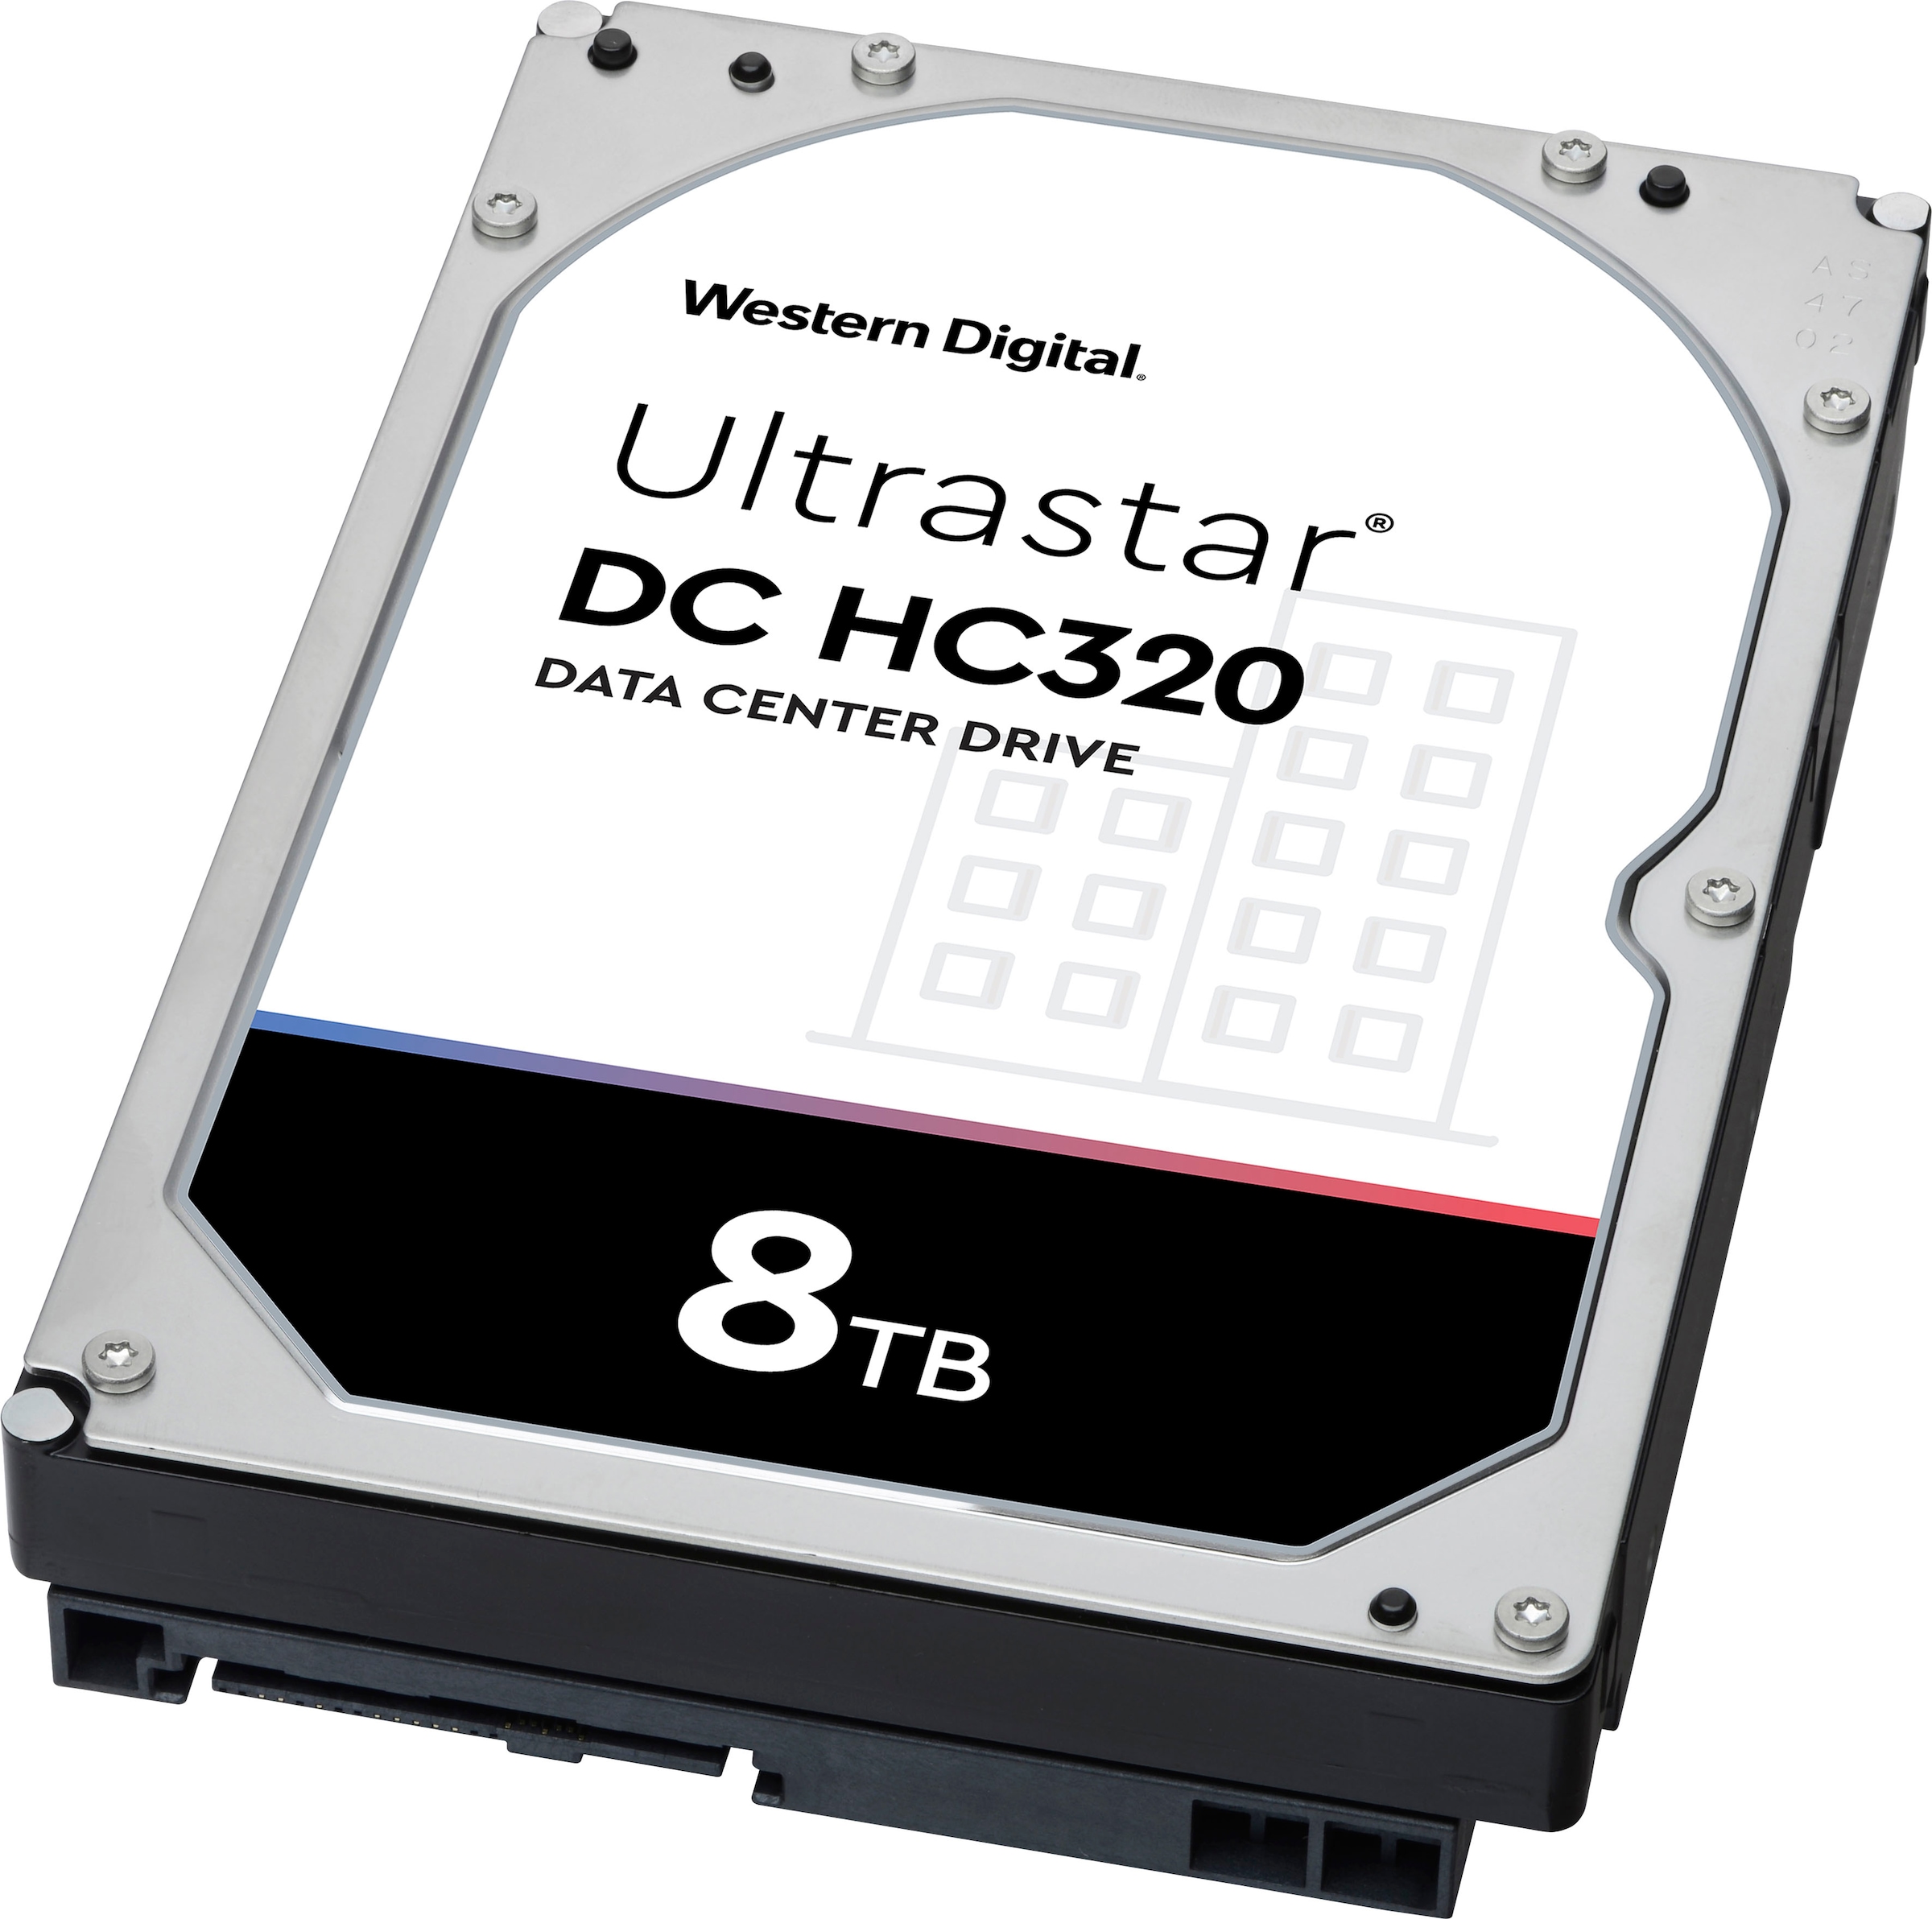 Western Digital HDD-Festplatte »Ultrastar DC HC320 8TB«, 3,5 Zoll, Anschluss SATA, Bulk